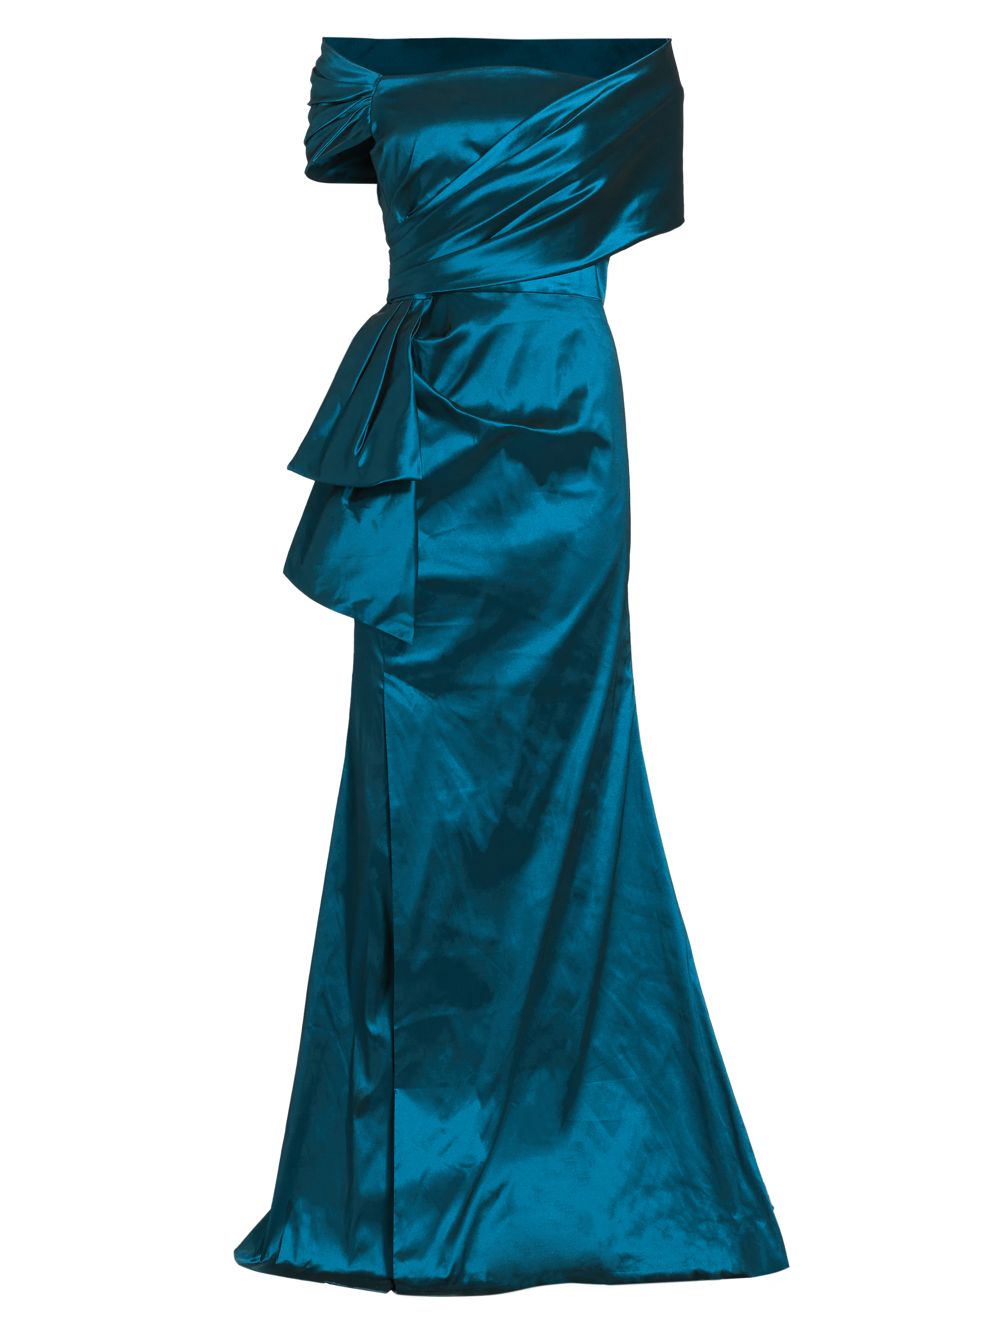 Атласное платье из тафты Teri Jon by Rickie Freeman платье рубашка миди из тафты с пайетками и объемными рукавами teri jon by rickie freeman черный